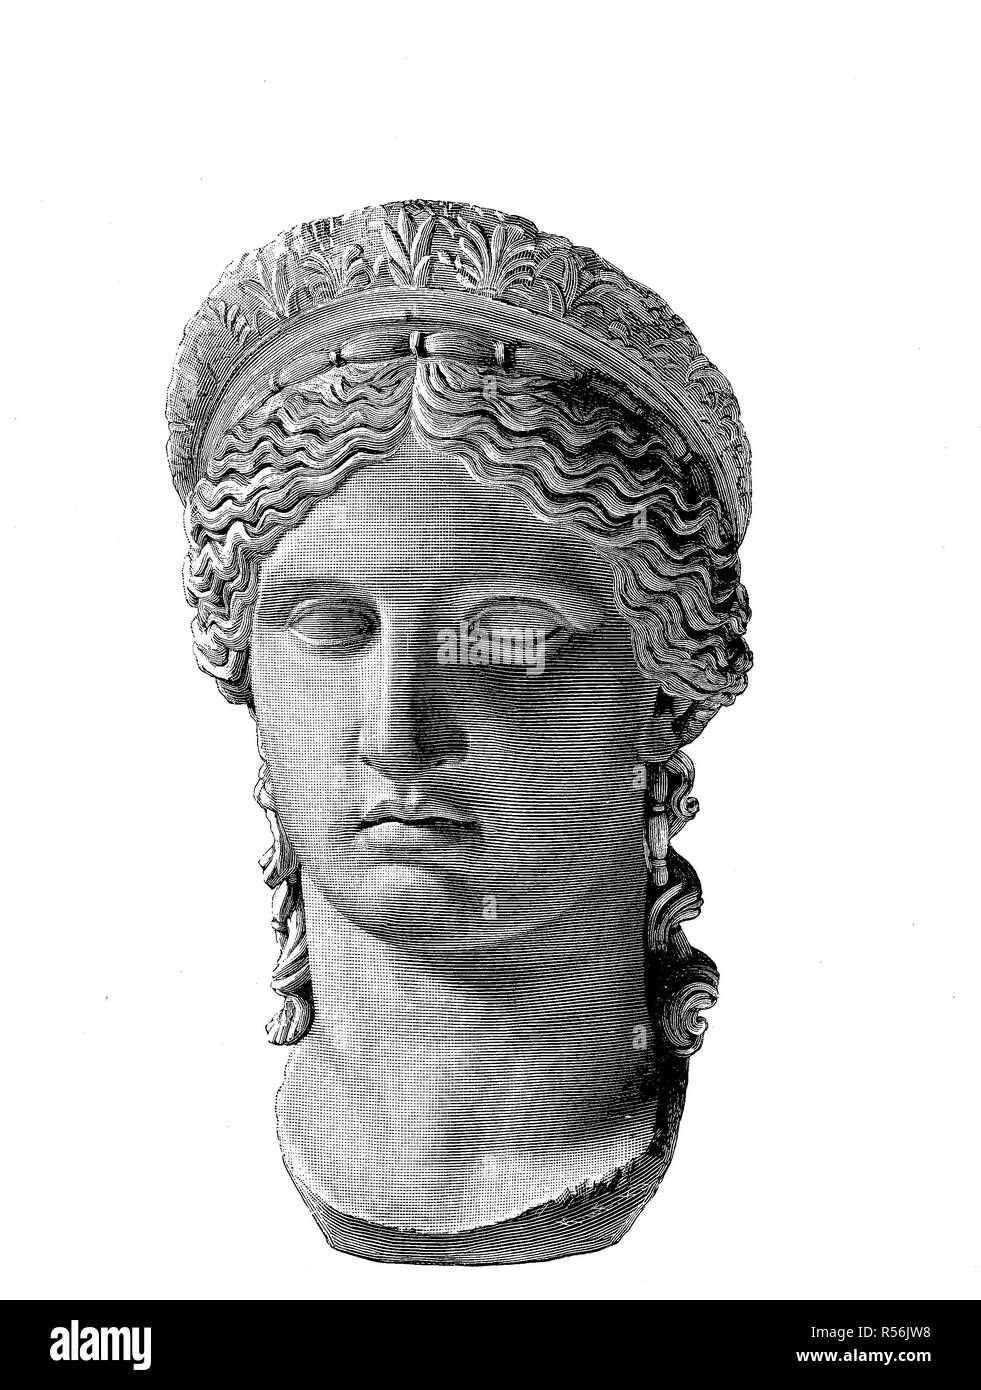 who is hera in greek mythology